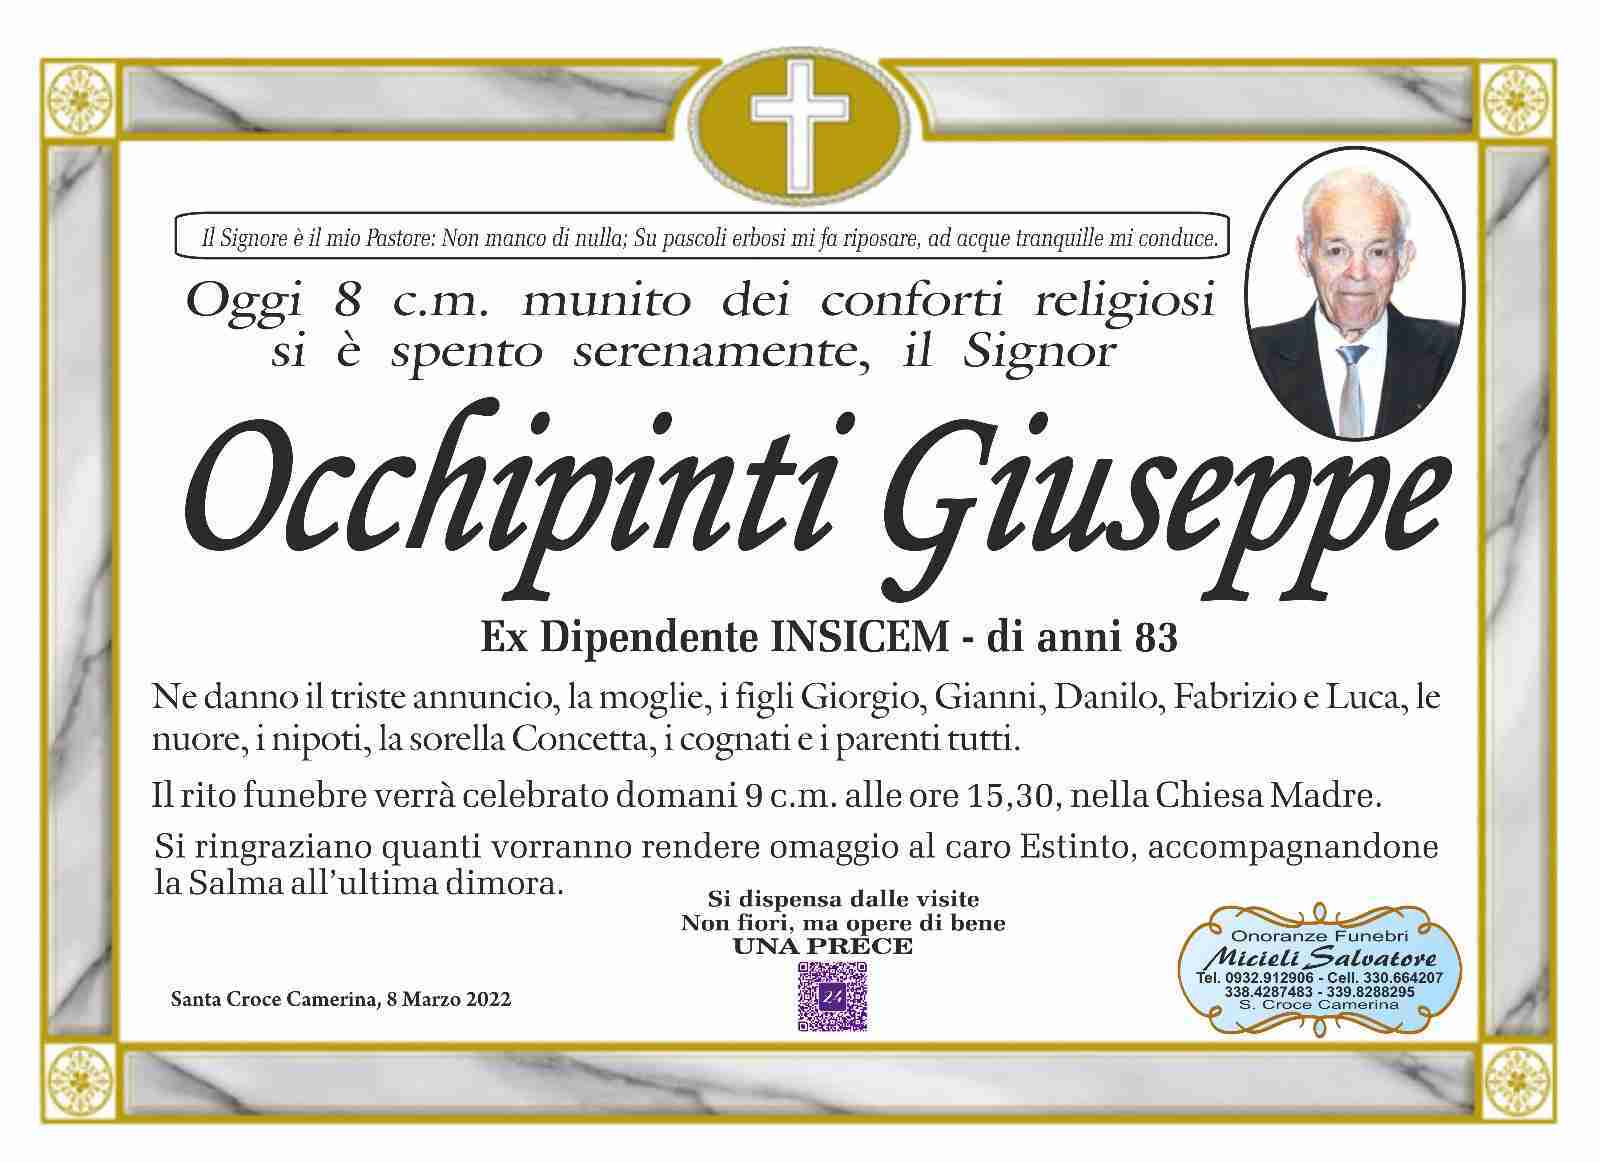 Giuseppe Occhipinti